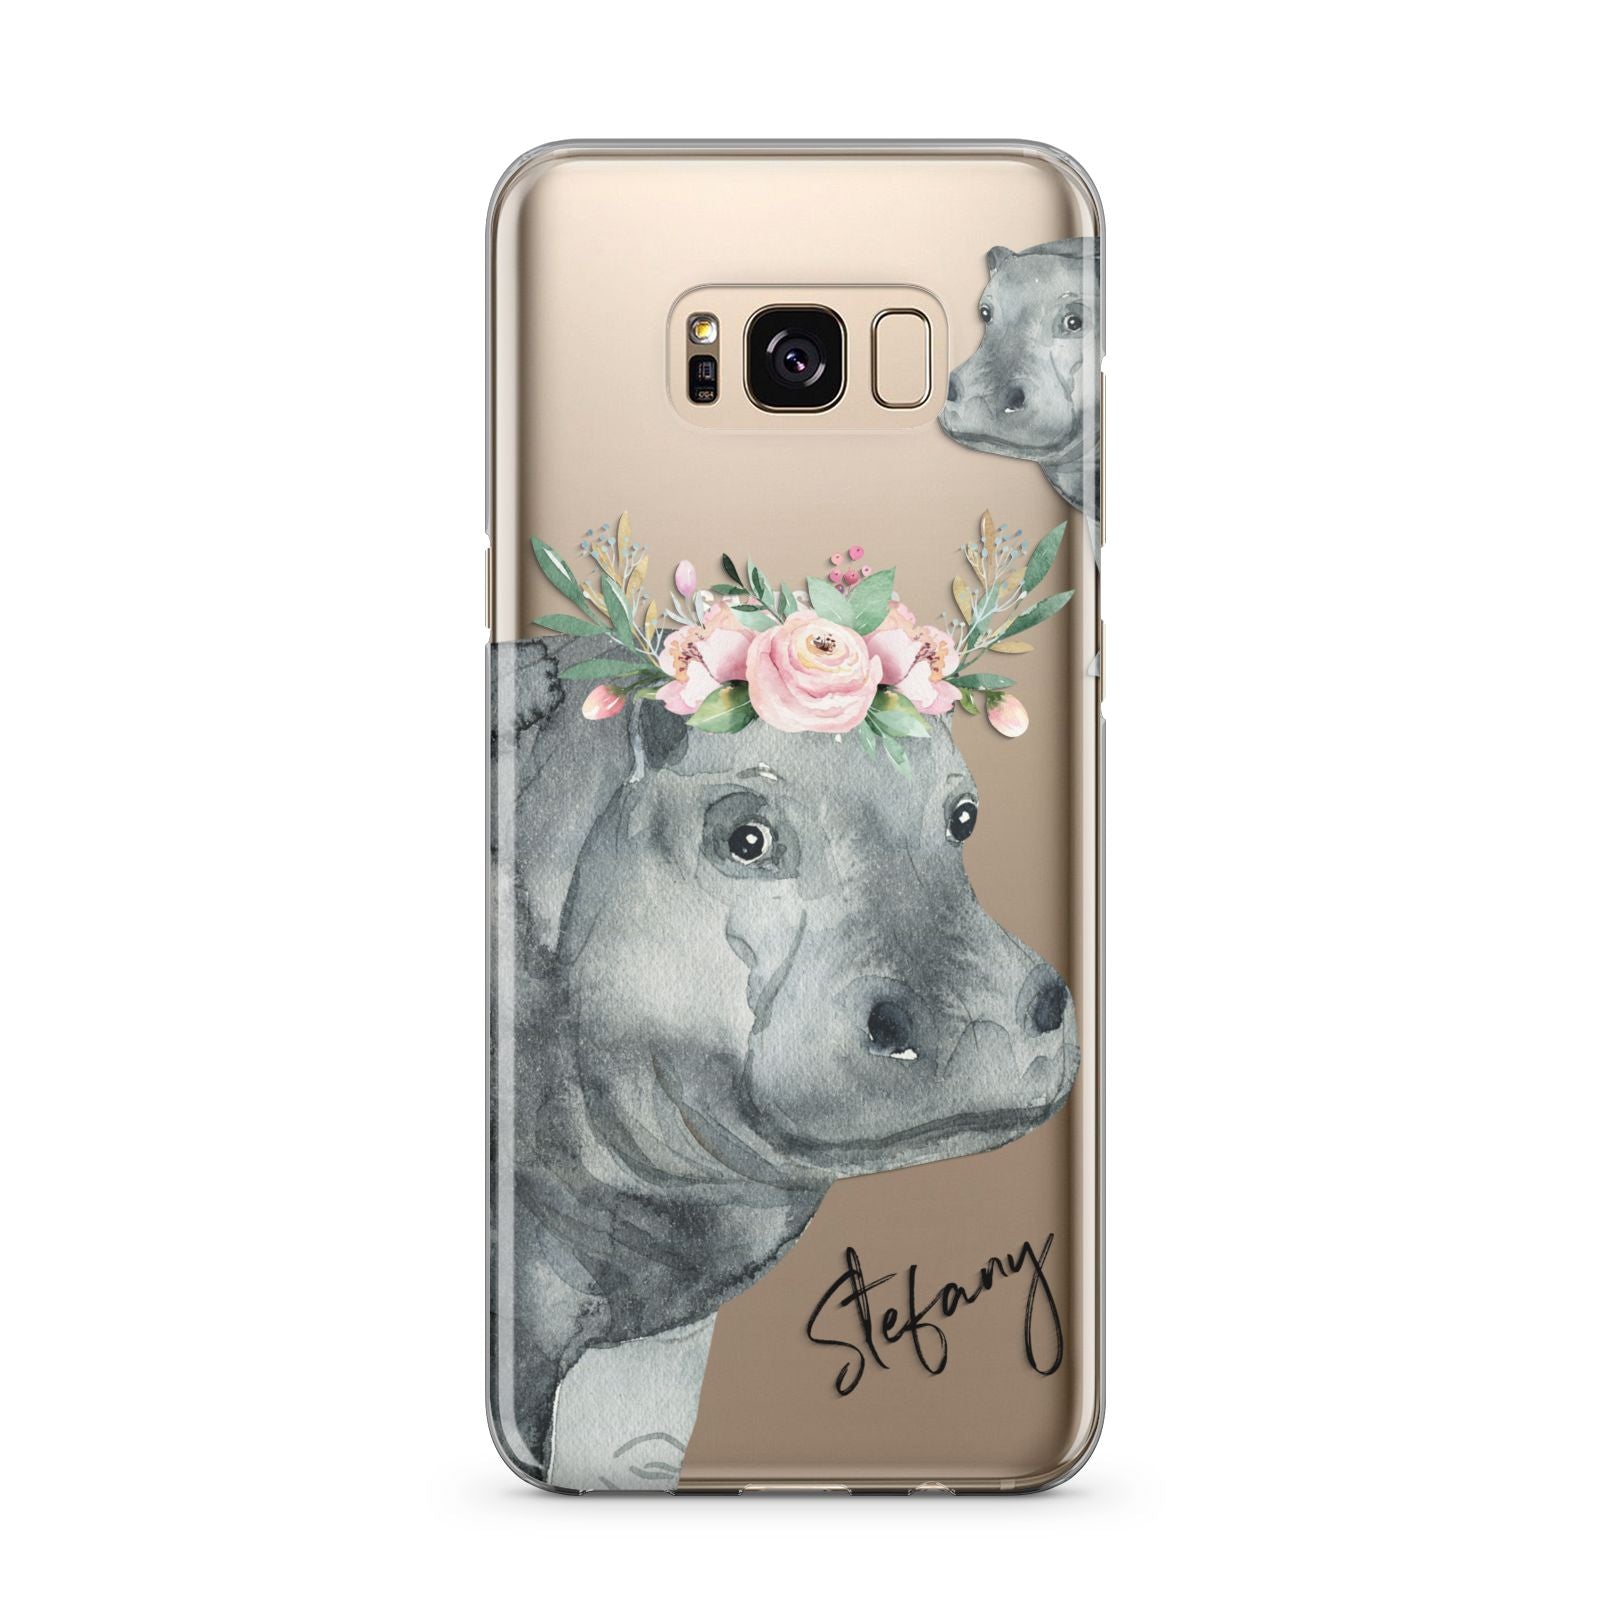 Personalised Hippopotamus Samsung Galaxy S8 Plus Case